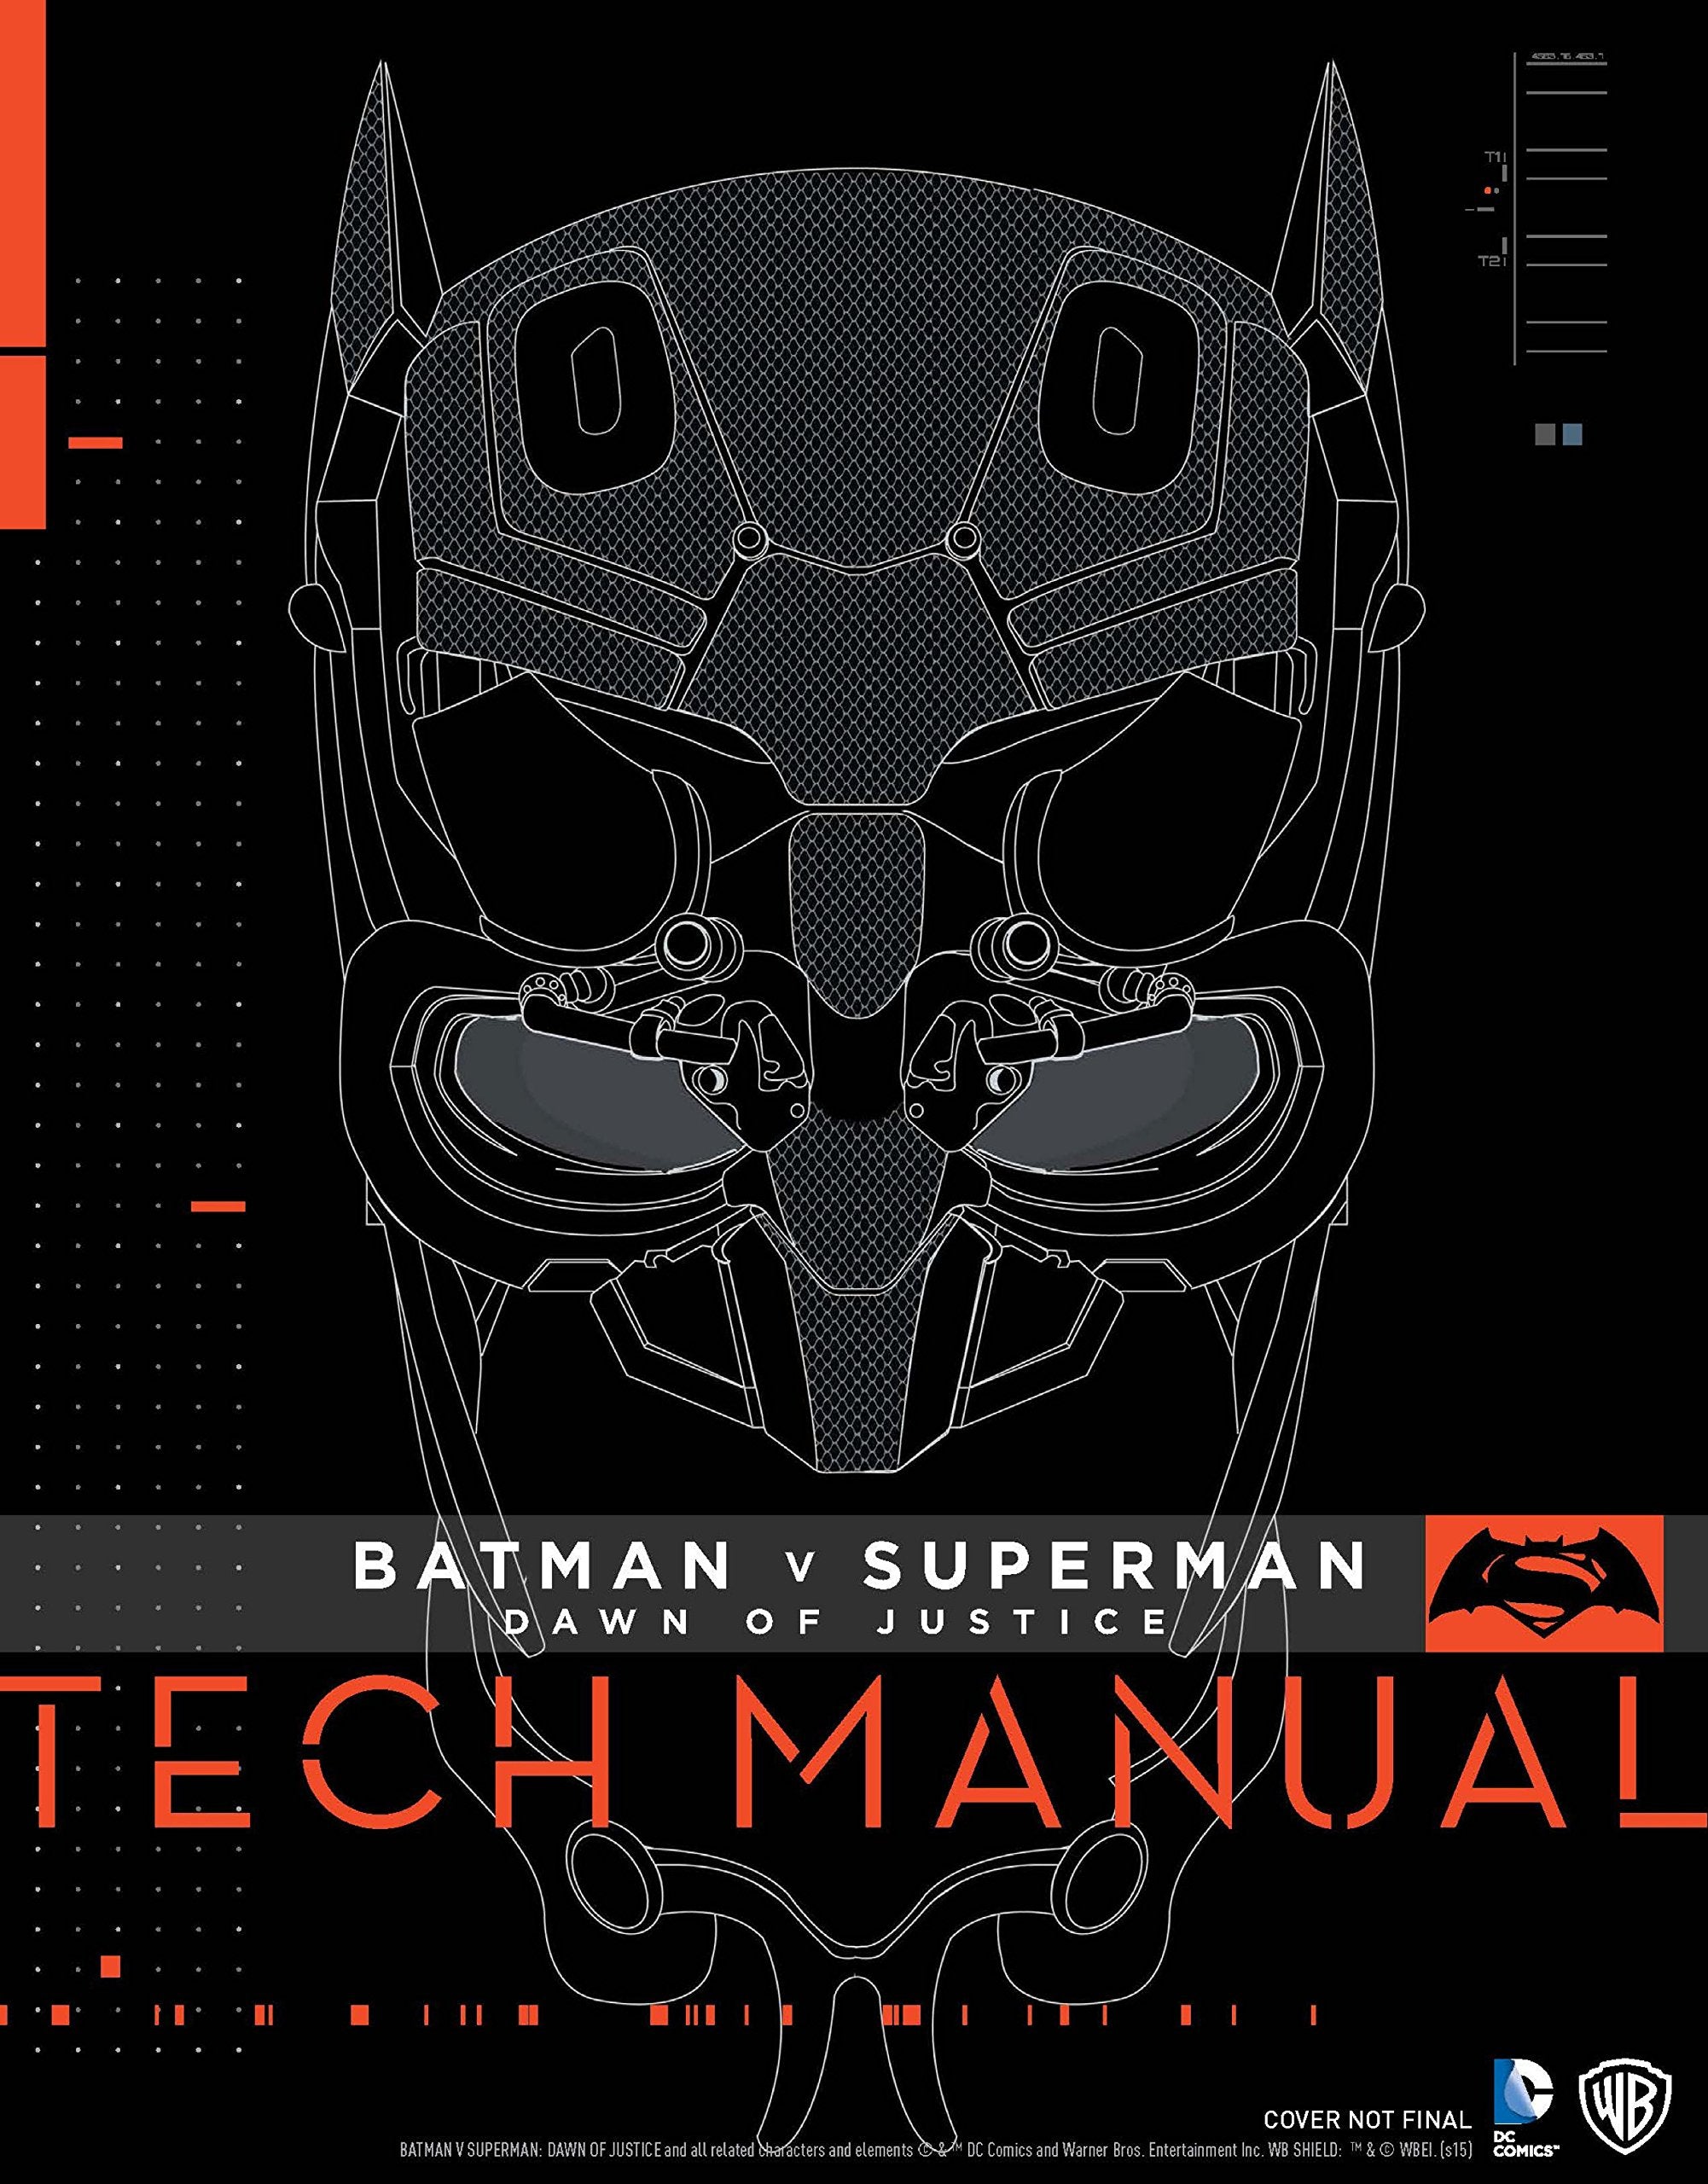 Batman V Superman Dawn of Justice Tech Manual - The Comic Warehouse